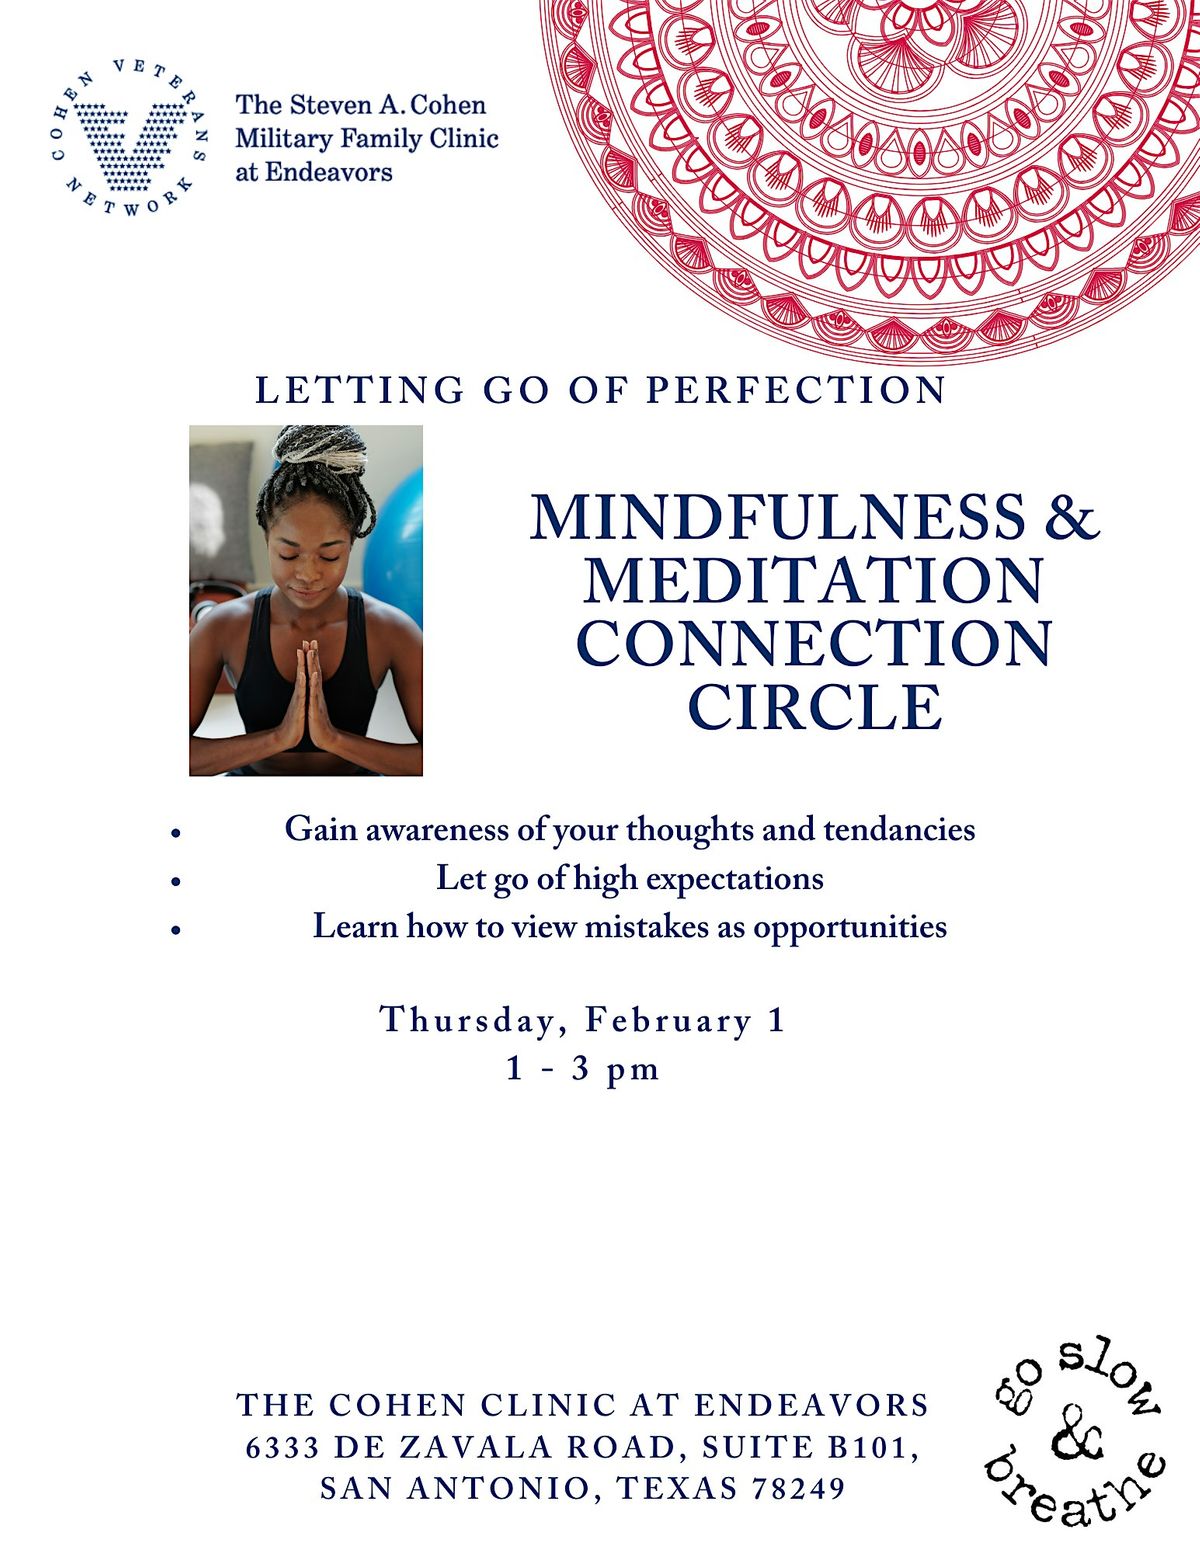 Mindfulness & meditation Connection Circle